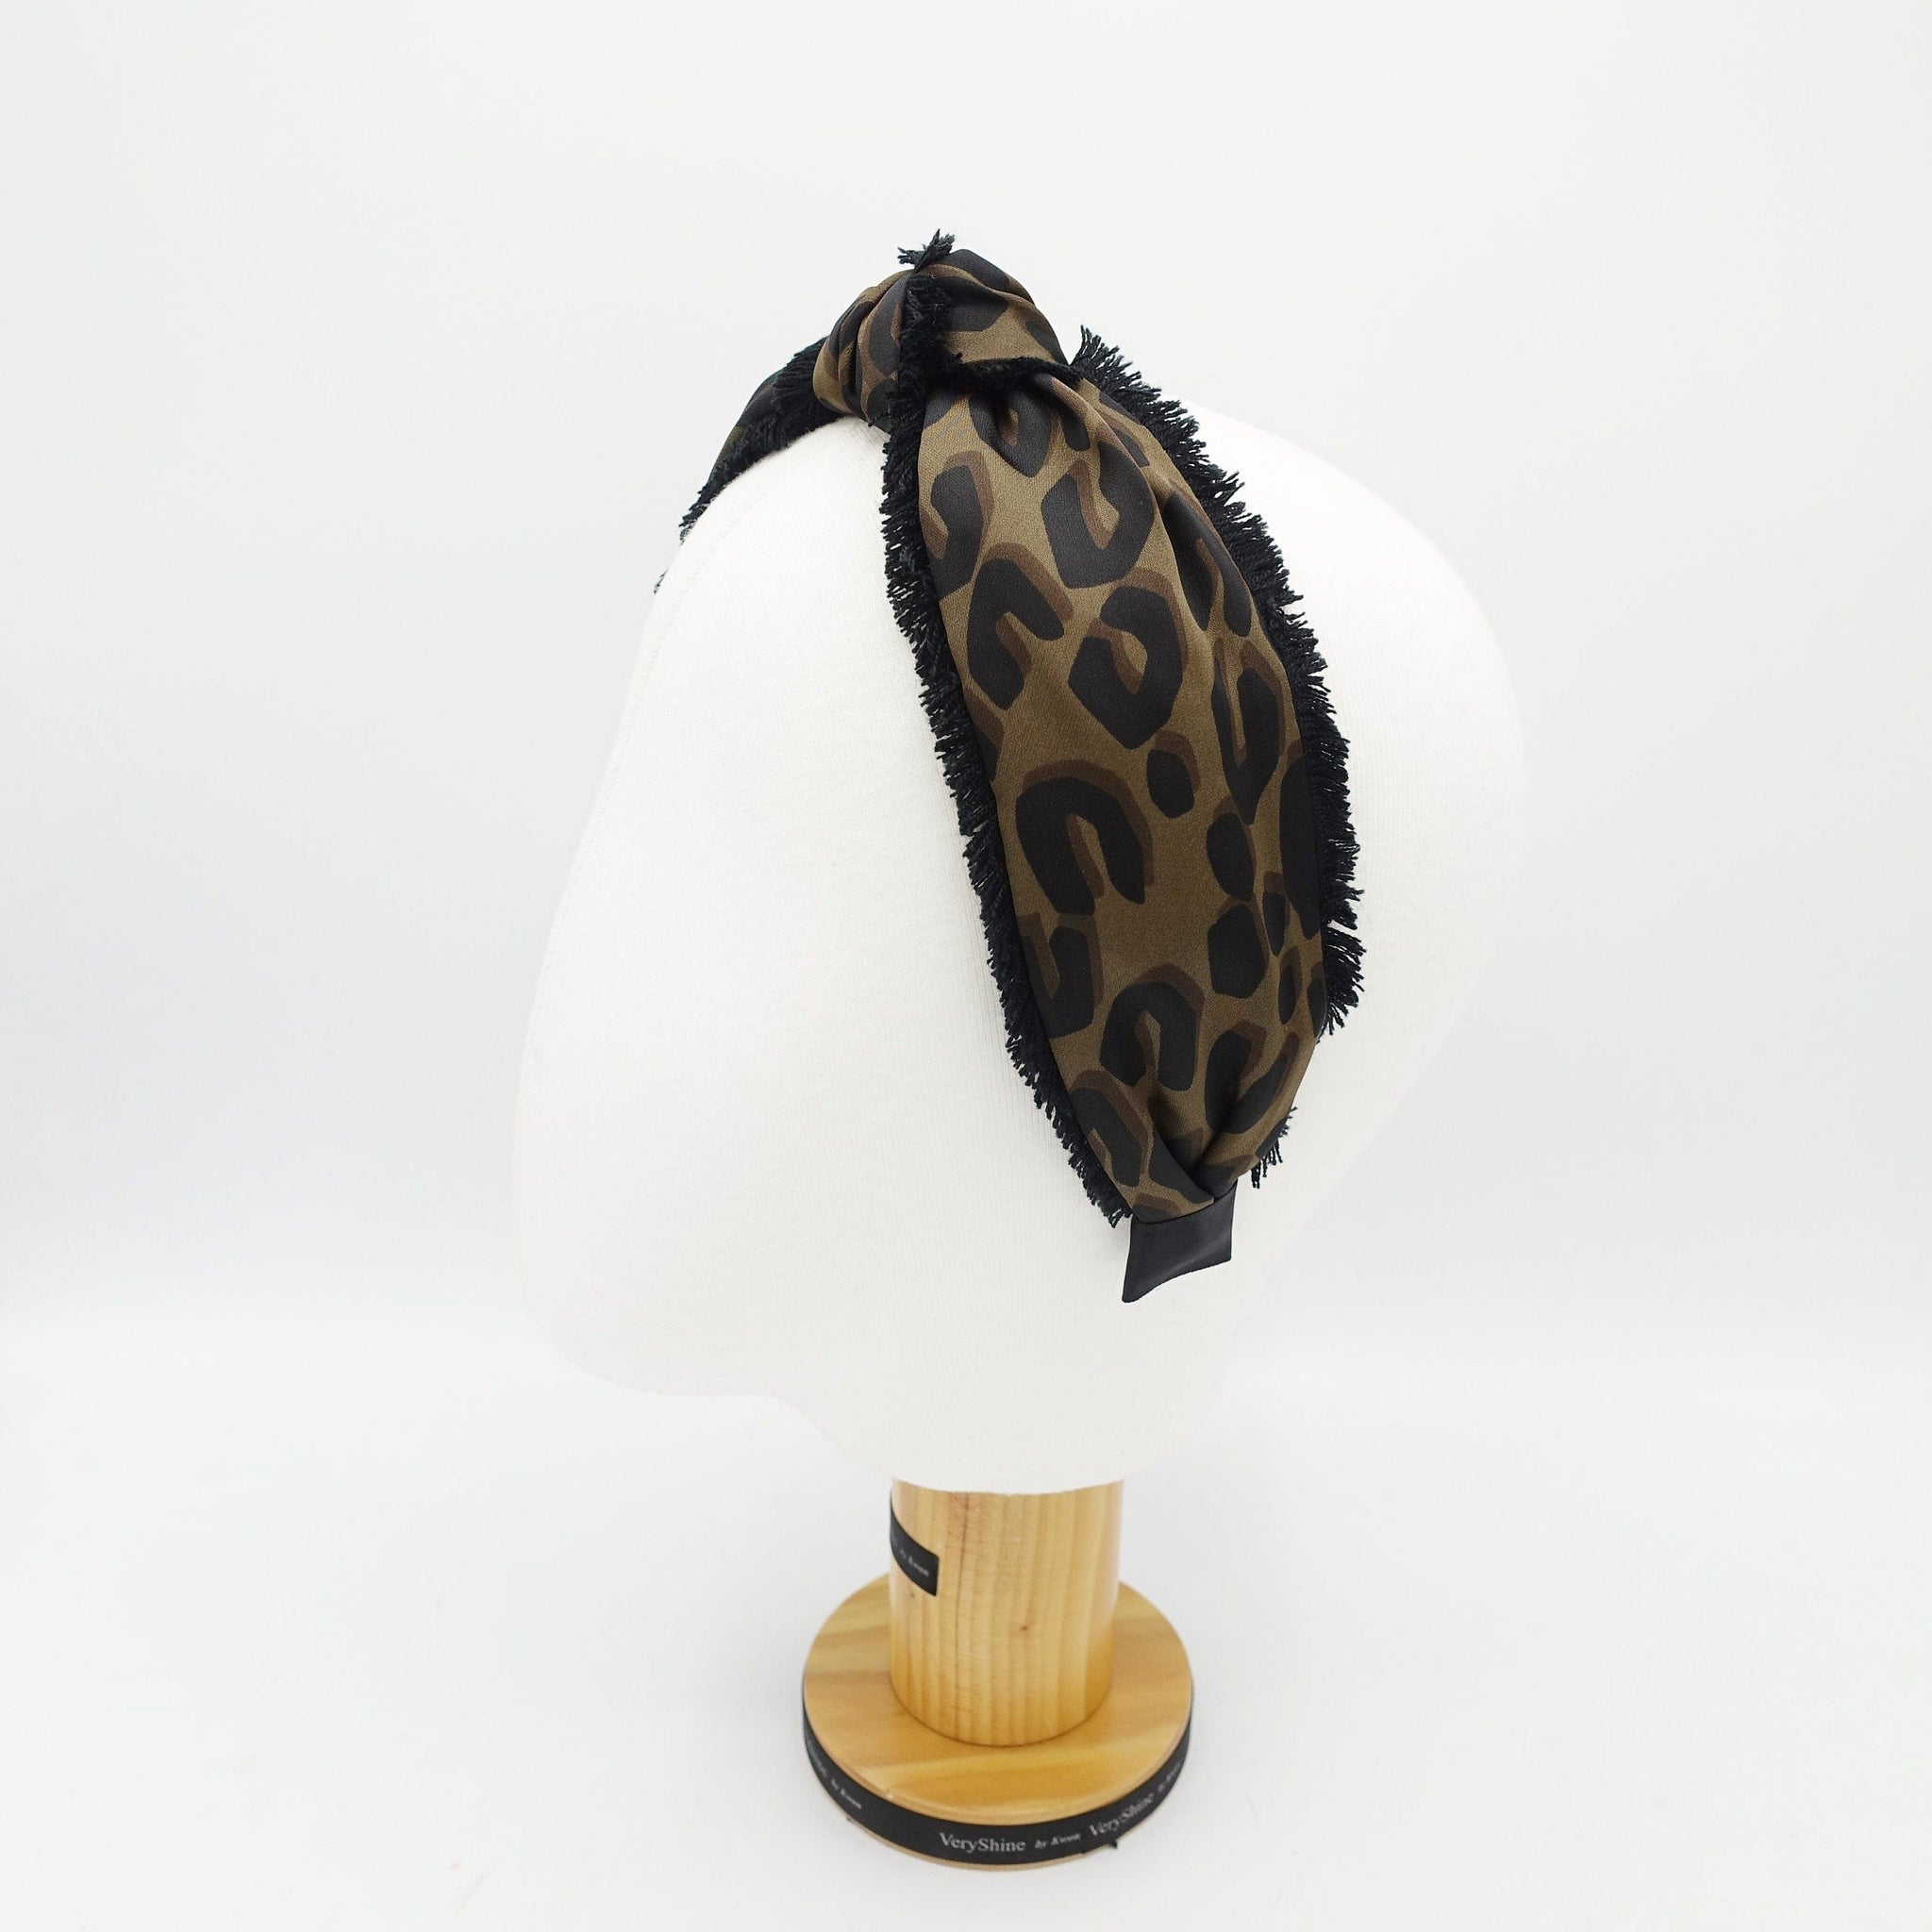 veryshine.com Headband leopard print fringe trim headband tassel hairband top knot hair accessory for women